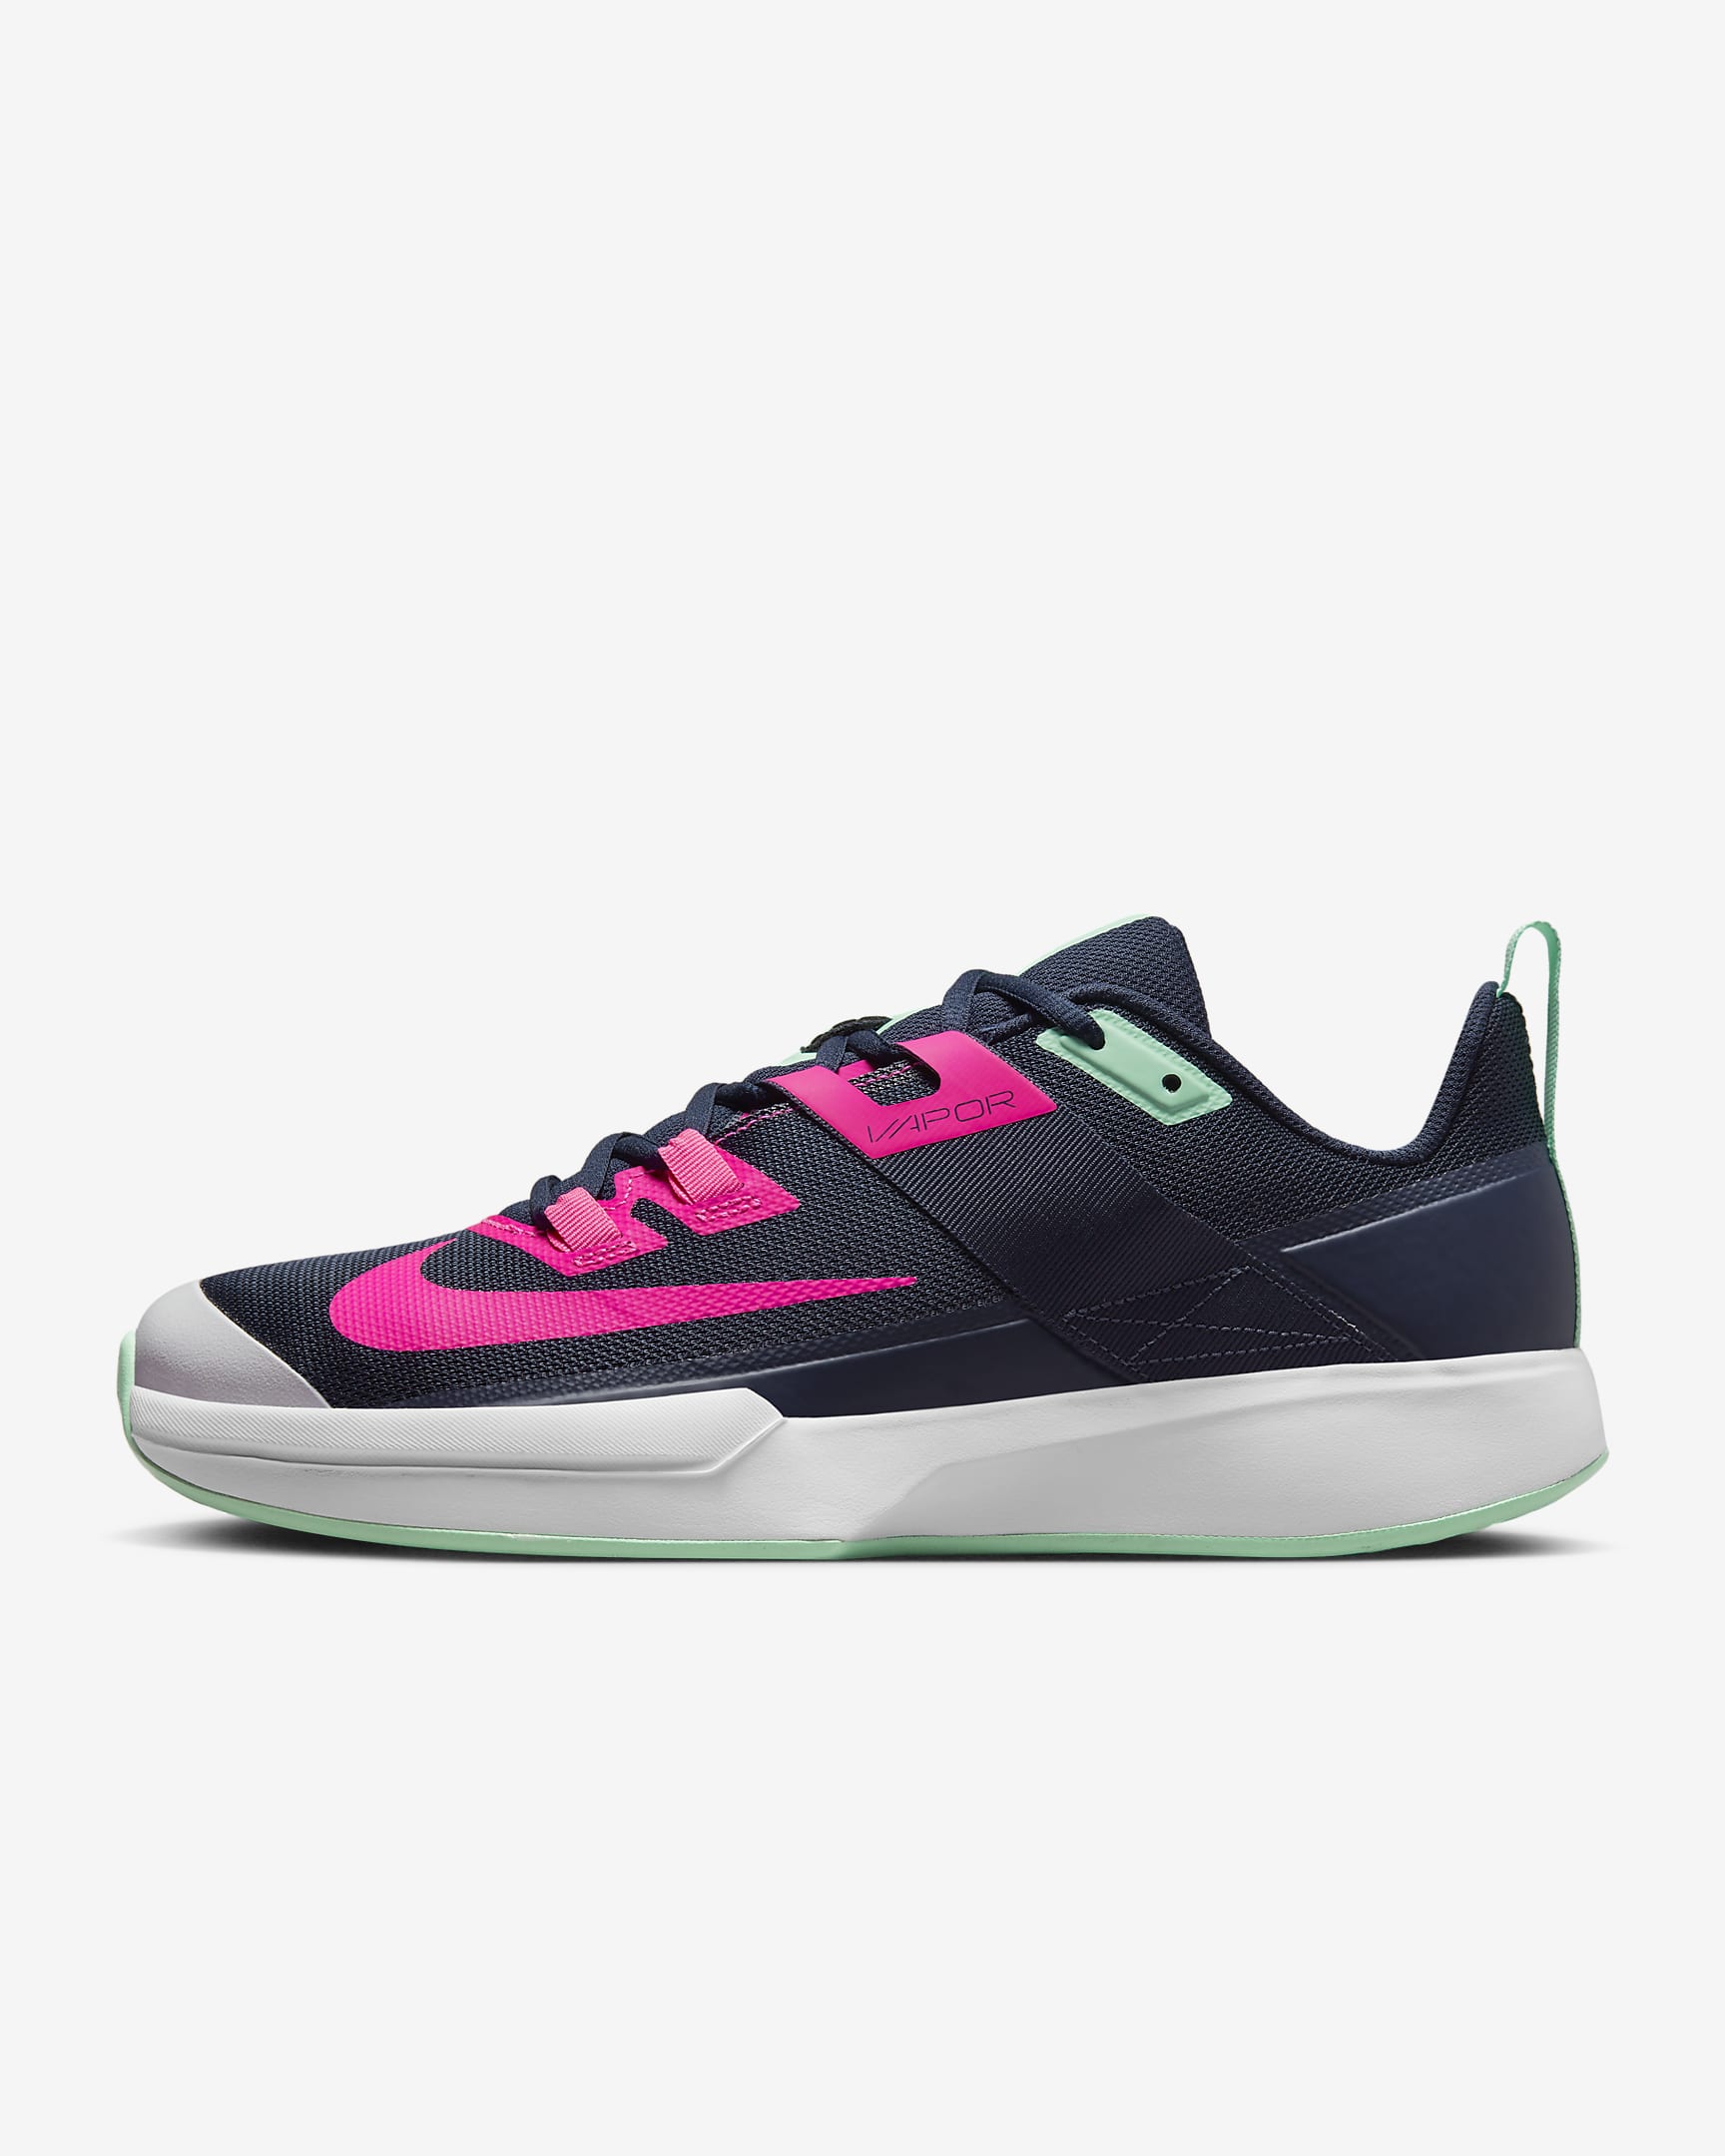 NikeCourt Vapor Lite Men's Hard Court Tennis Shoes. Nike SG